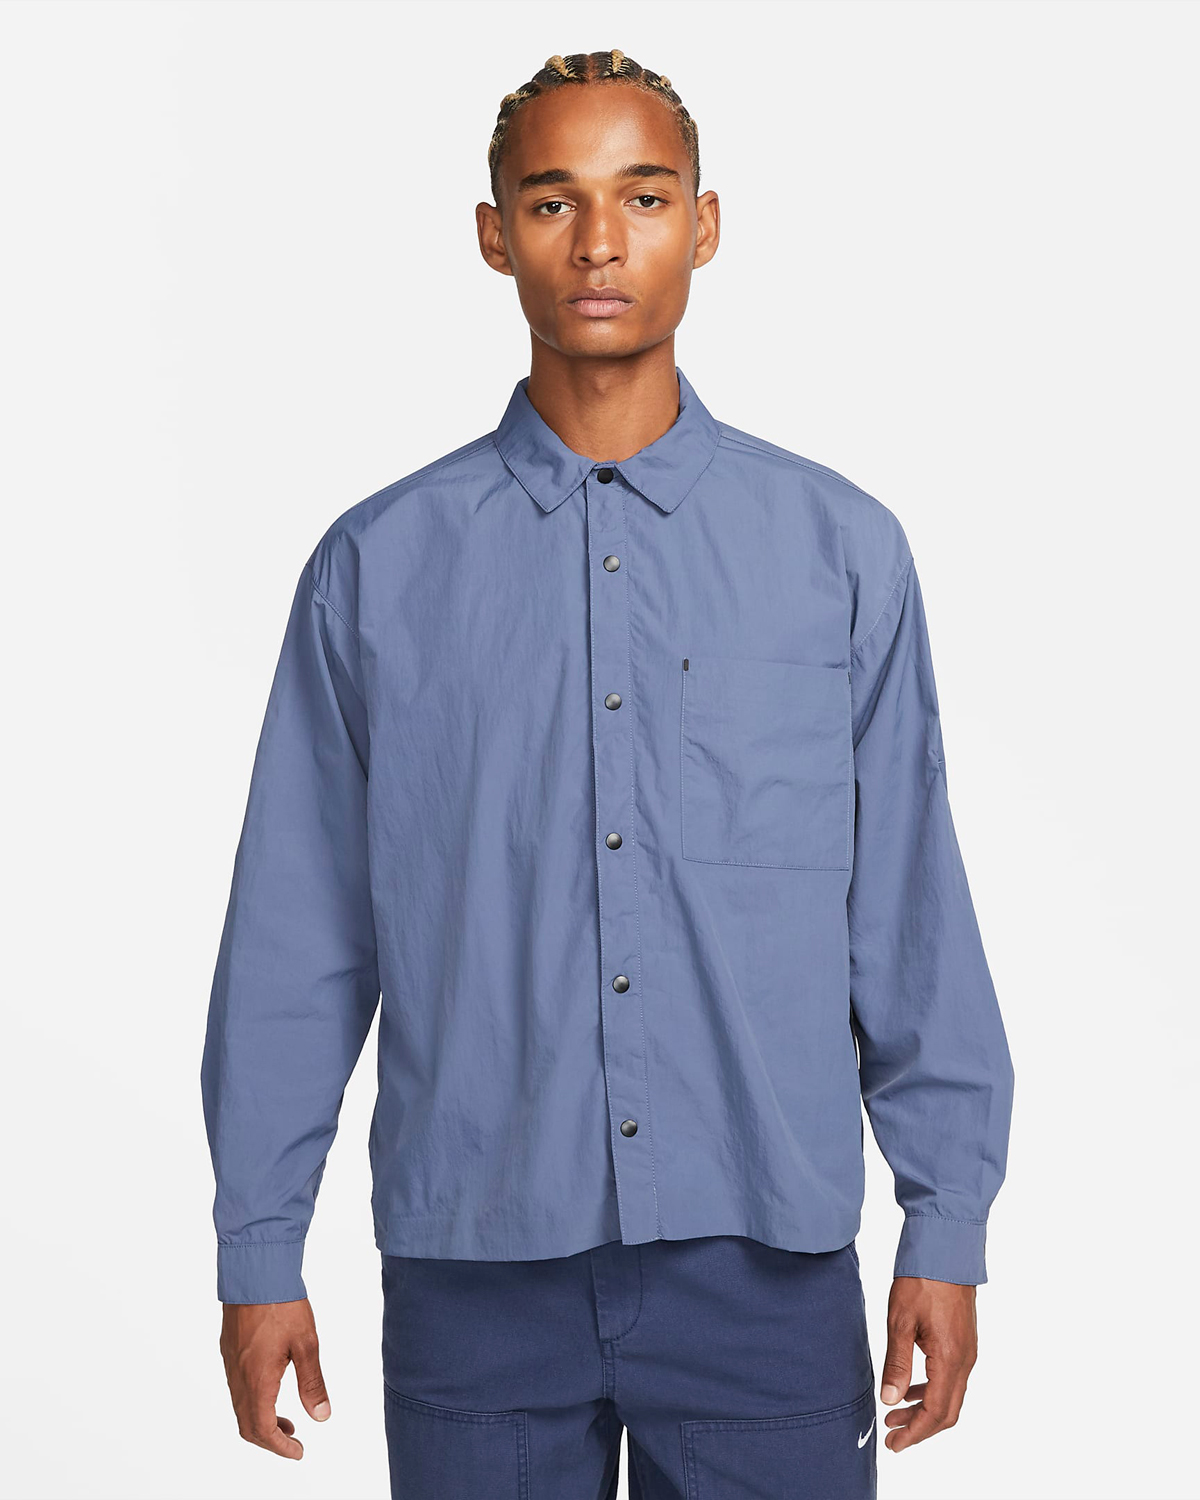 Nike-Tech-Pack-Long-Sleeve-Shirt-Diffused-Blue